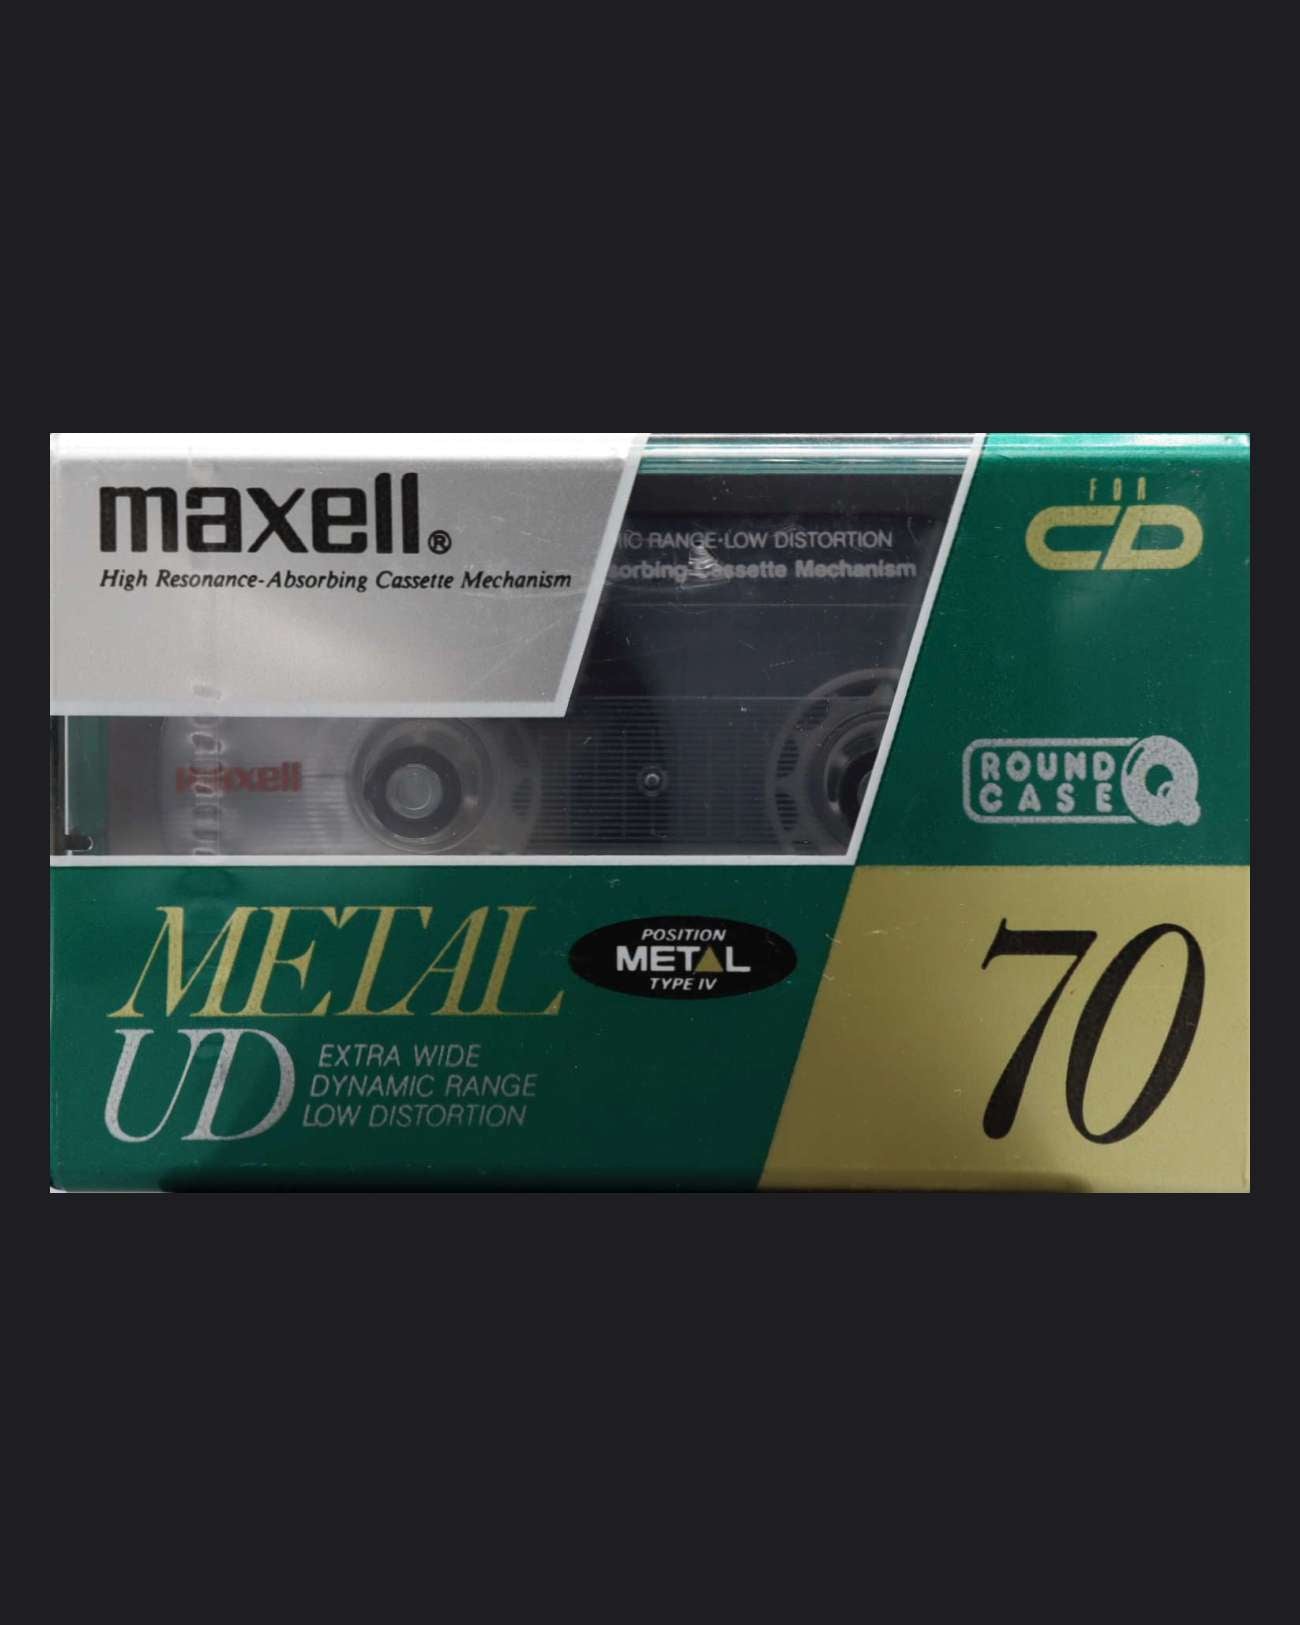 Maxell Metal UD (1990-1991 JP)